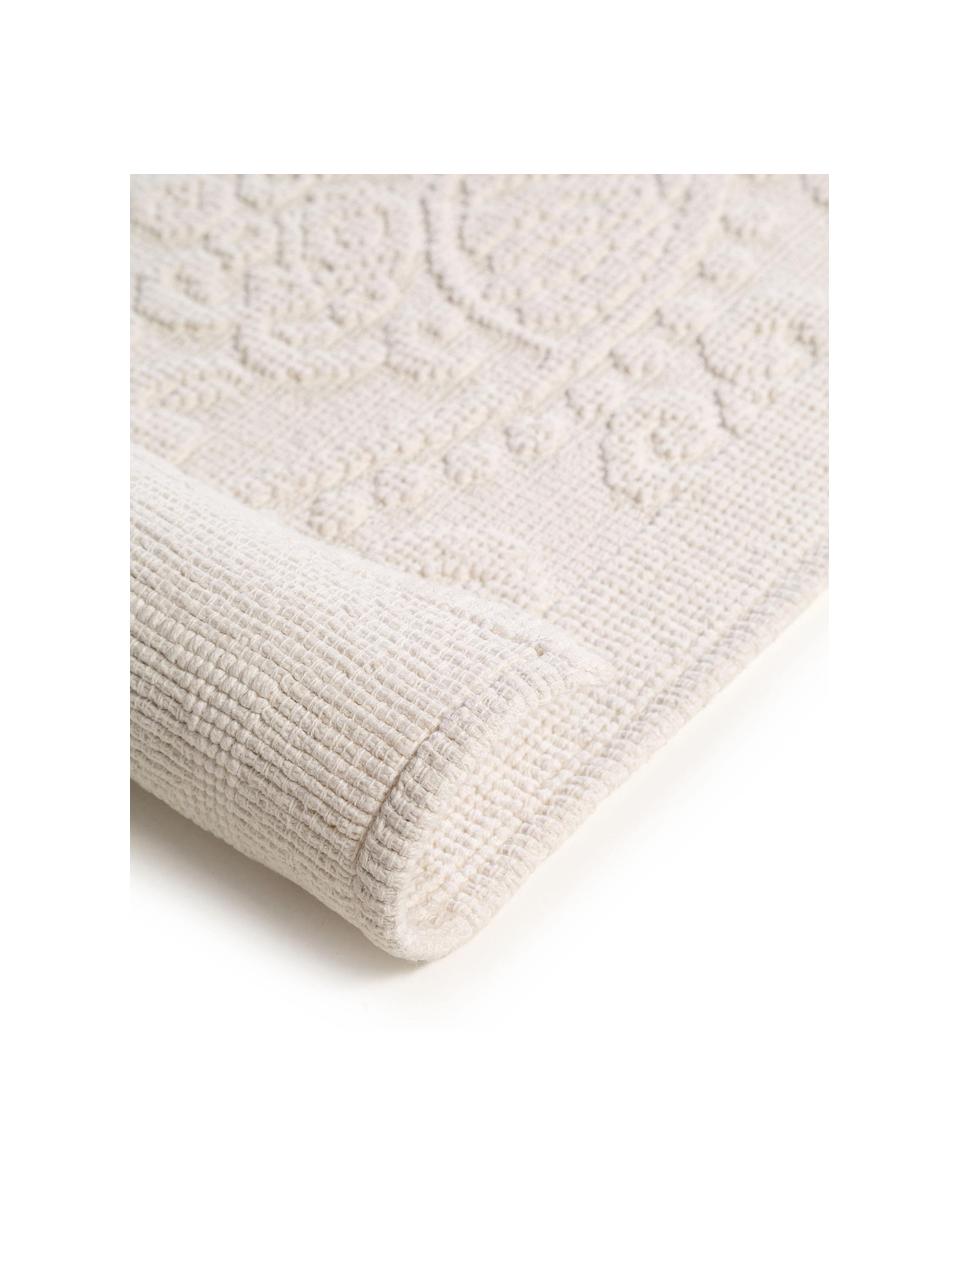 Tapis de bain motif floral Kaya, 100 % coton, Blanc crème, larg. 50 x long. 80 cm